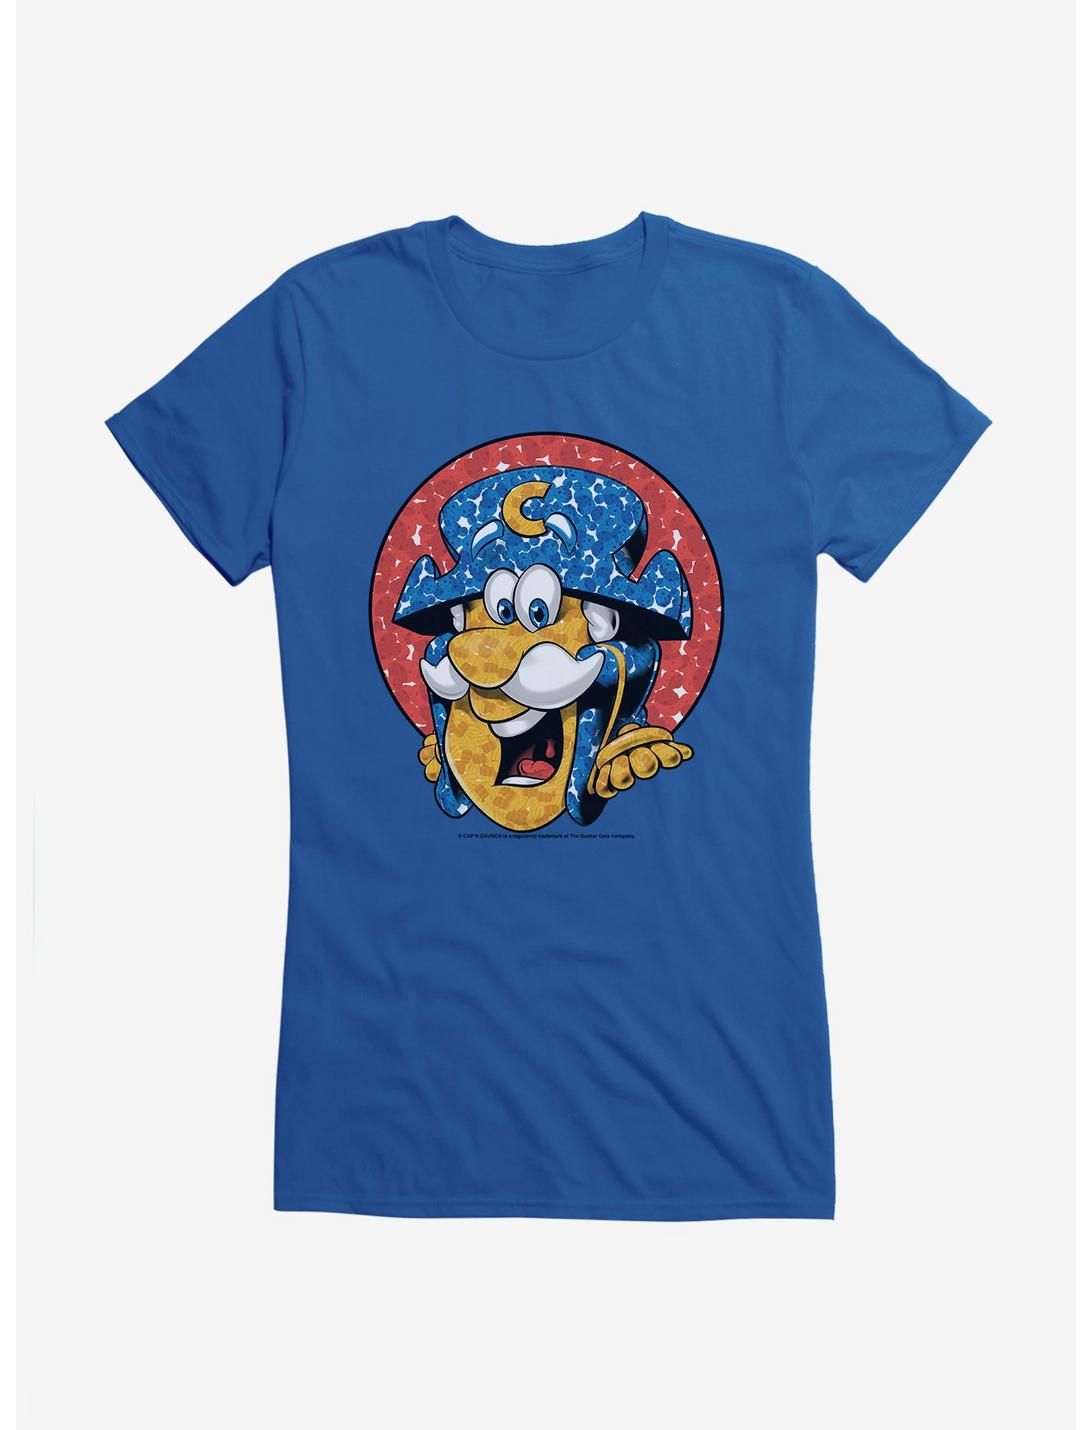 Cap'n Crunch Paint Logo Girls T-Shirt, , hi-res